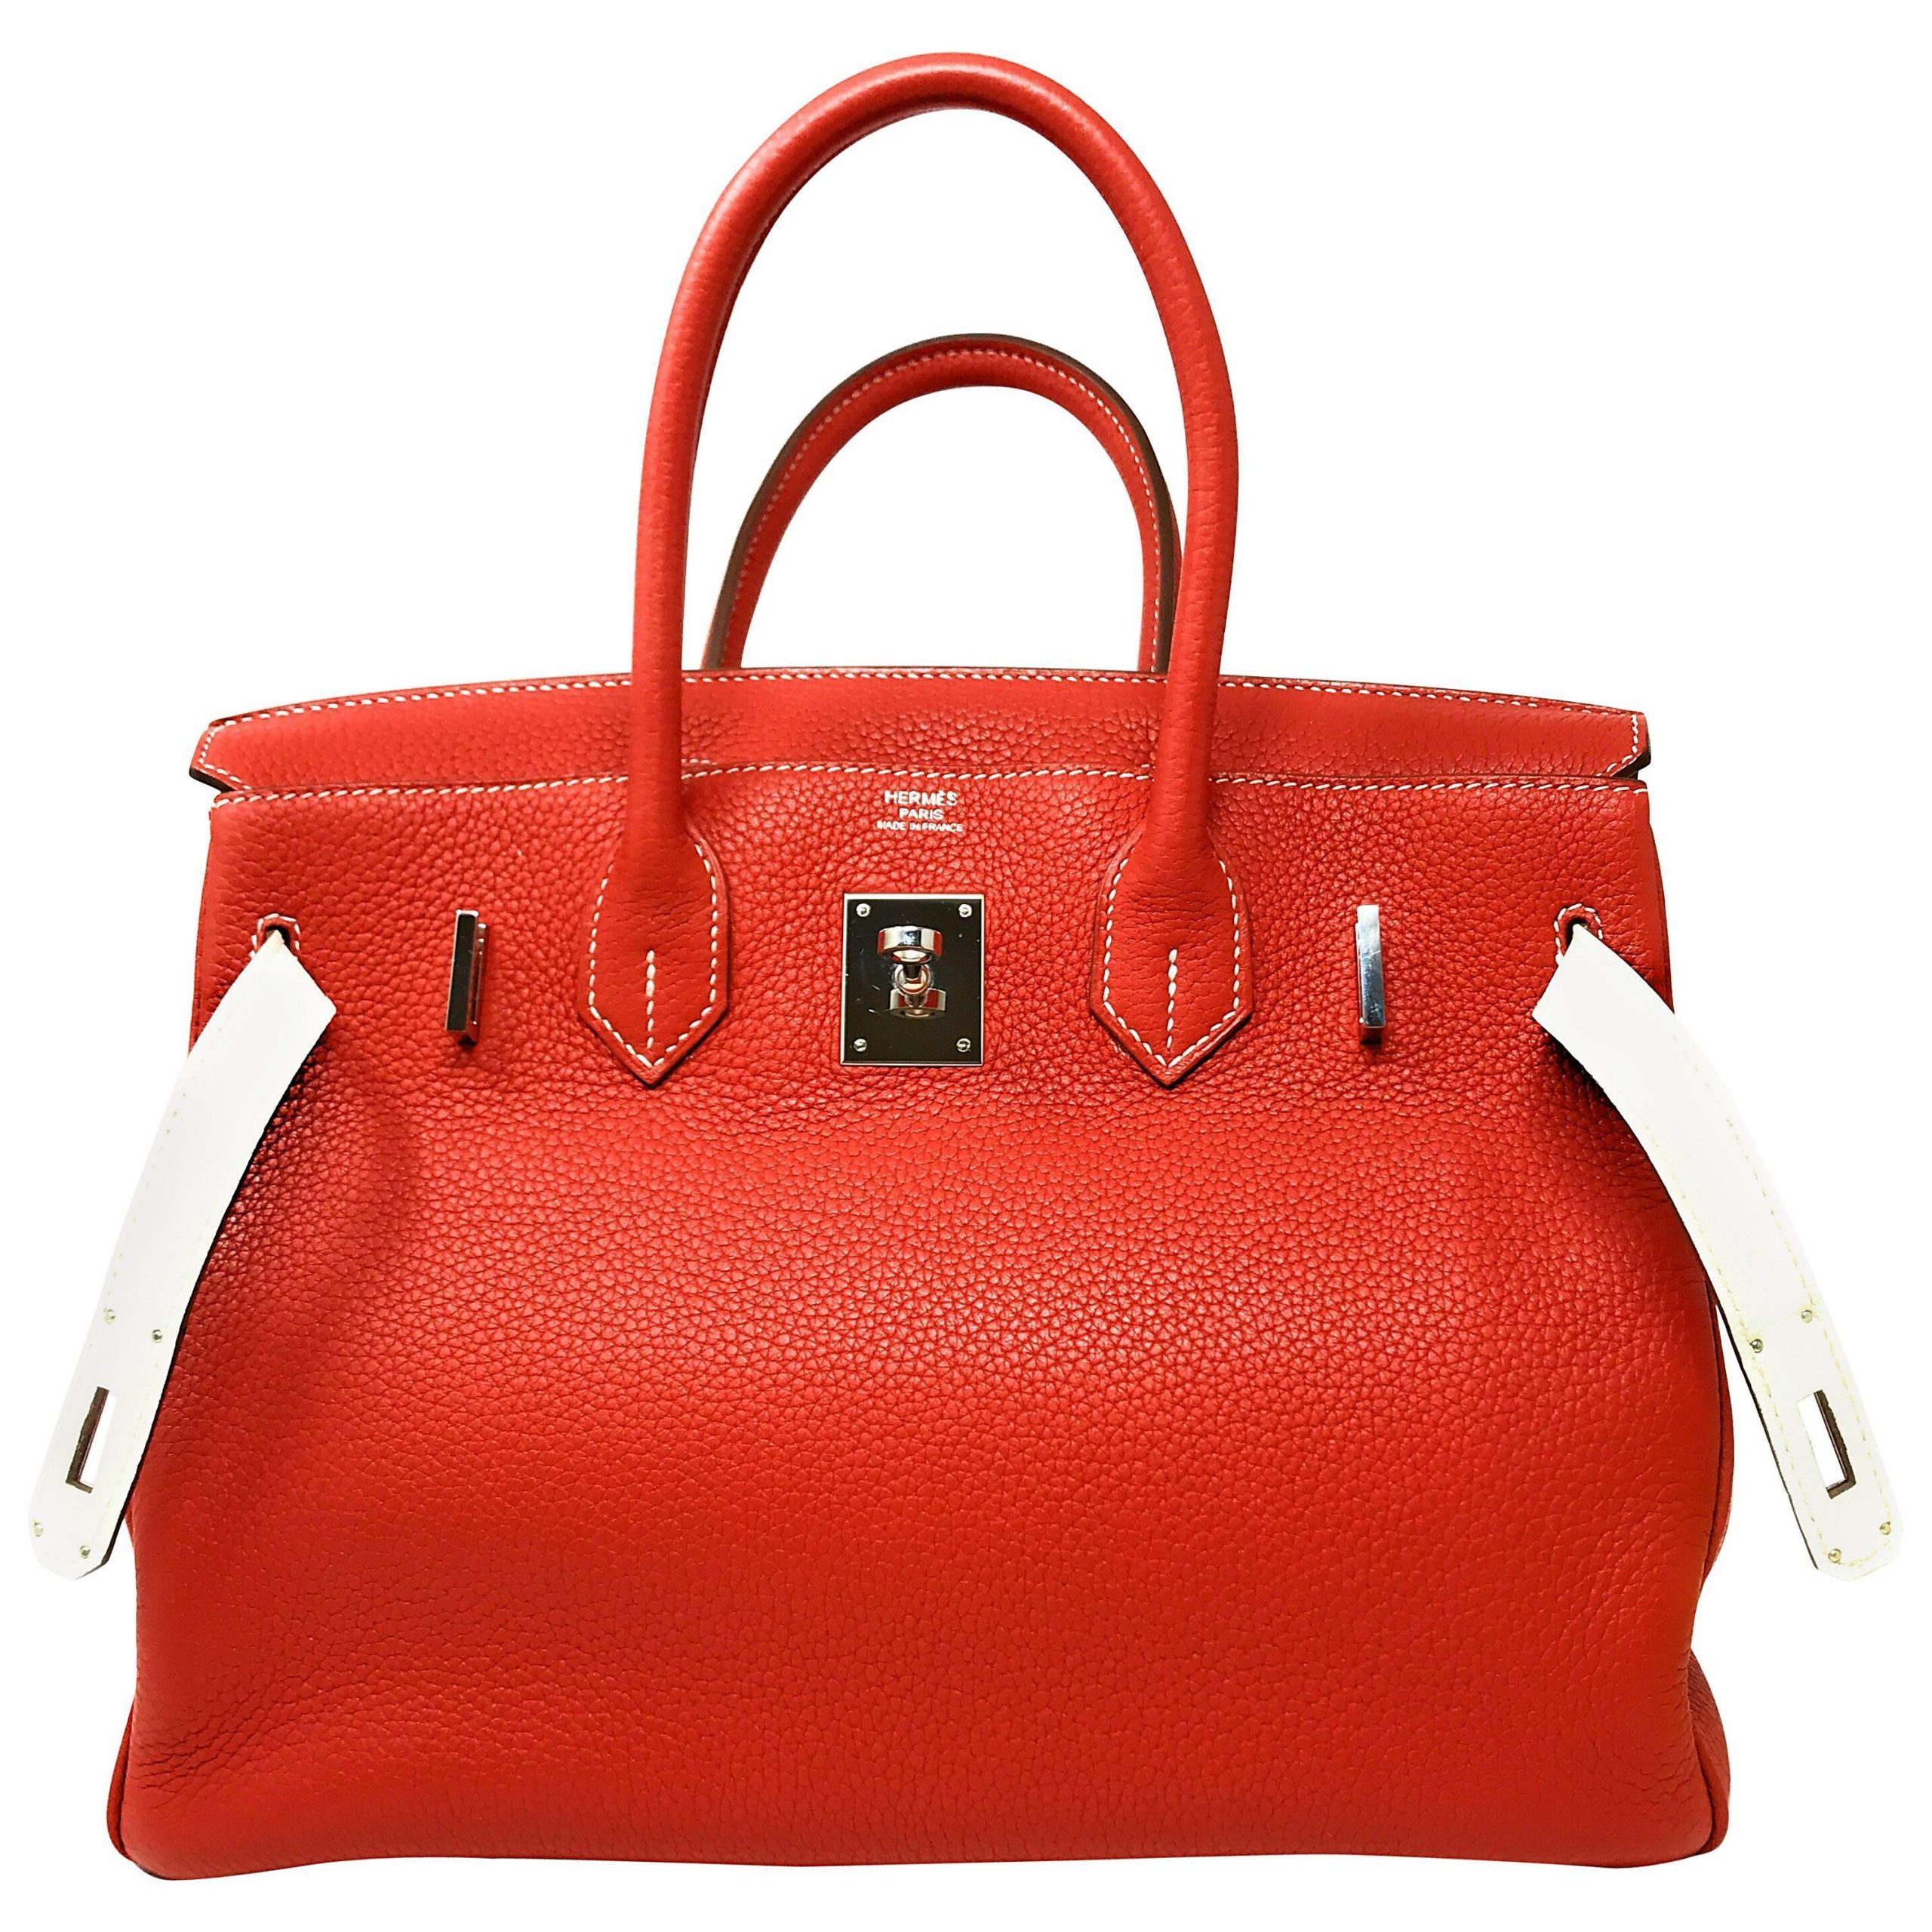 Hermes Birkin Bag - Upper-Luxury